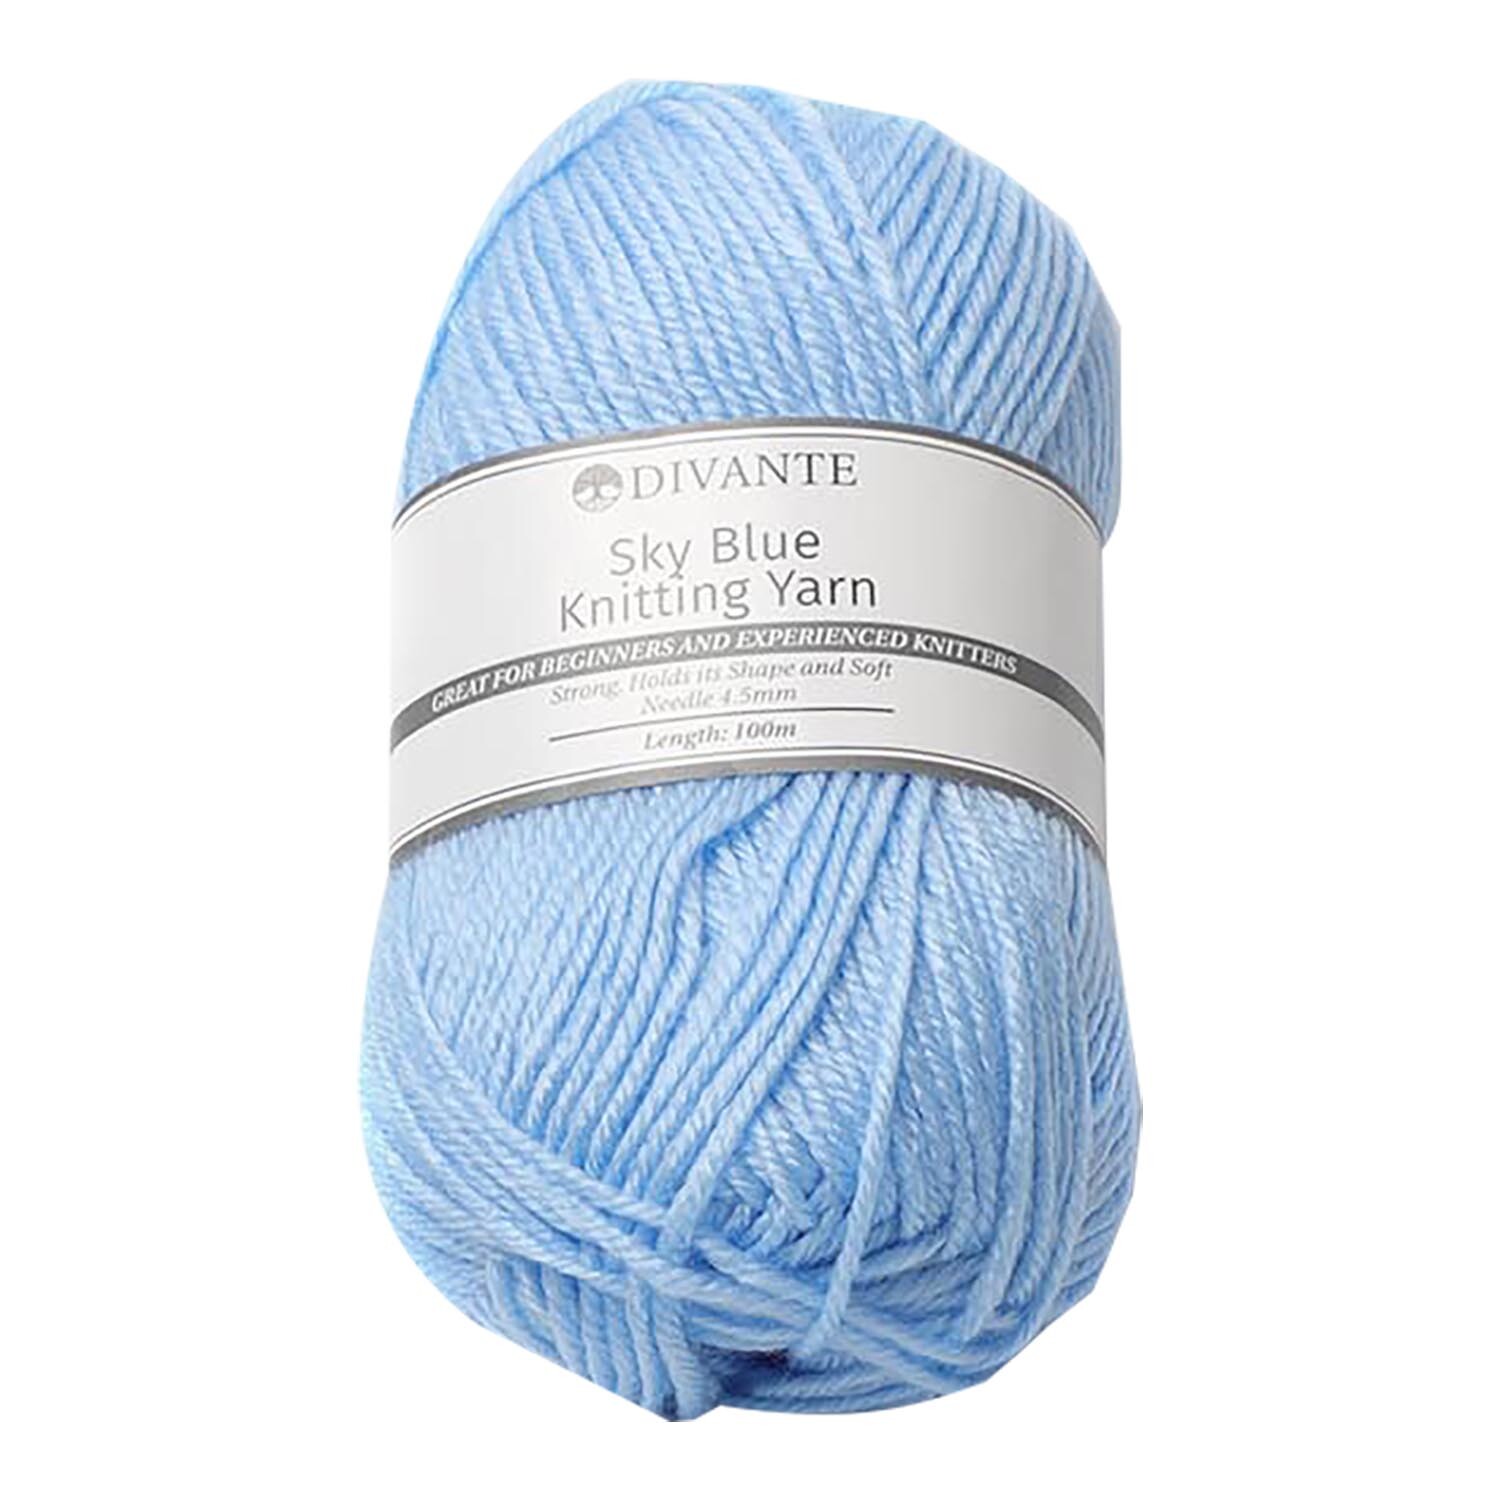 Divante Value Knitting Yarn - Sky Blue Image